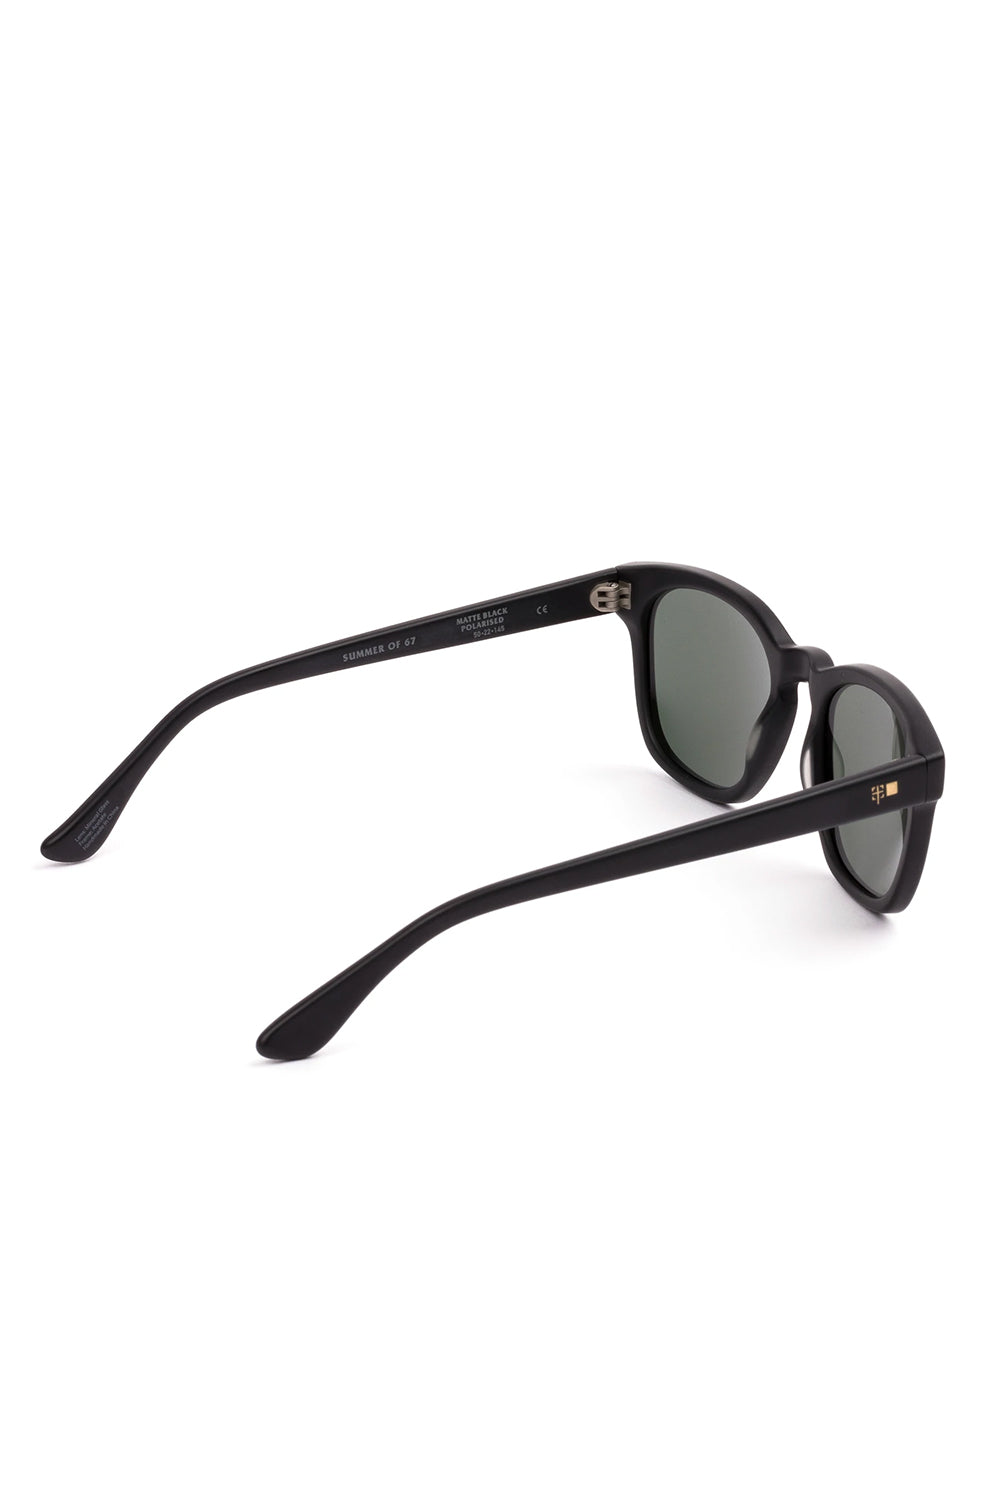 OTIS Summer Of 67 Sunglasses